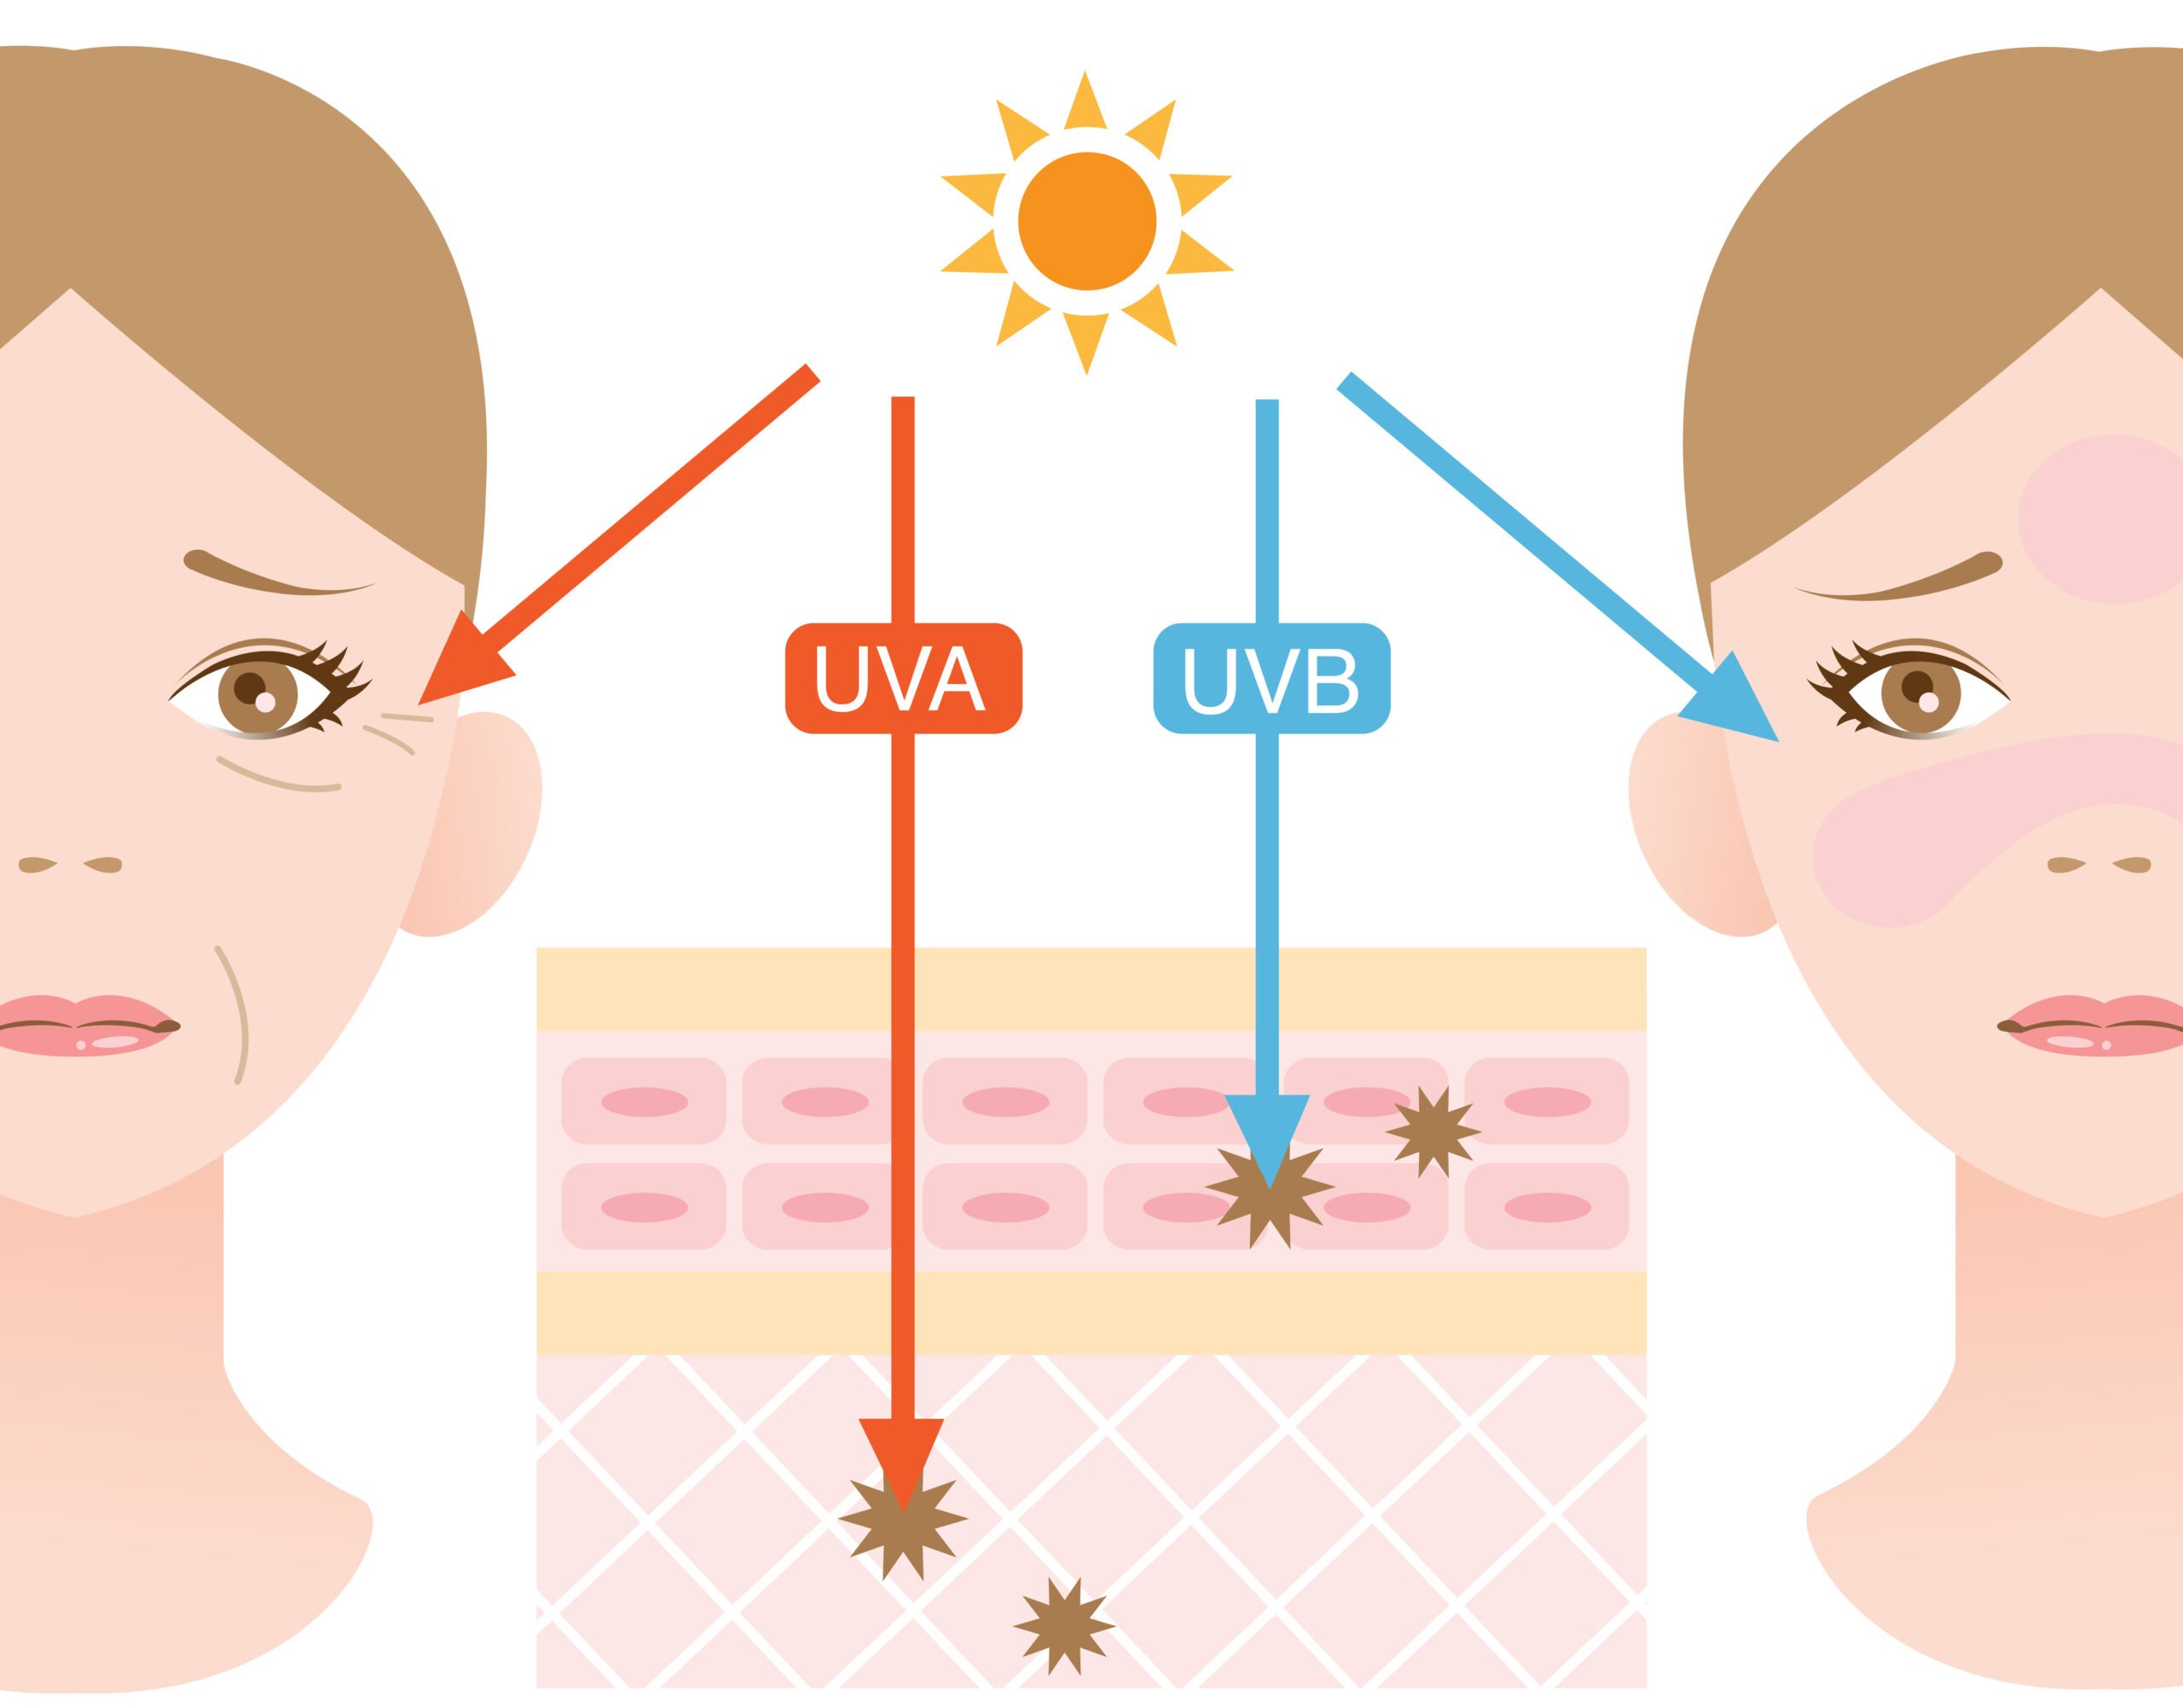 UV-ＡとUV-Bが肌に悪い影響を受けて困っている女性のイラスト